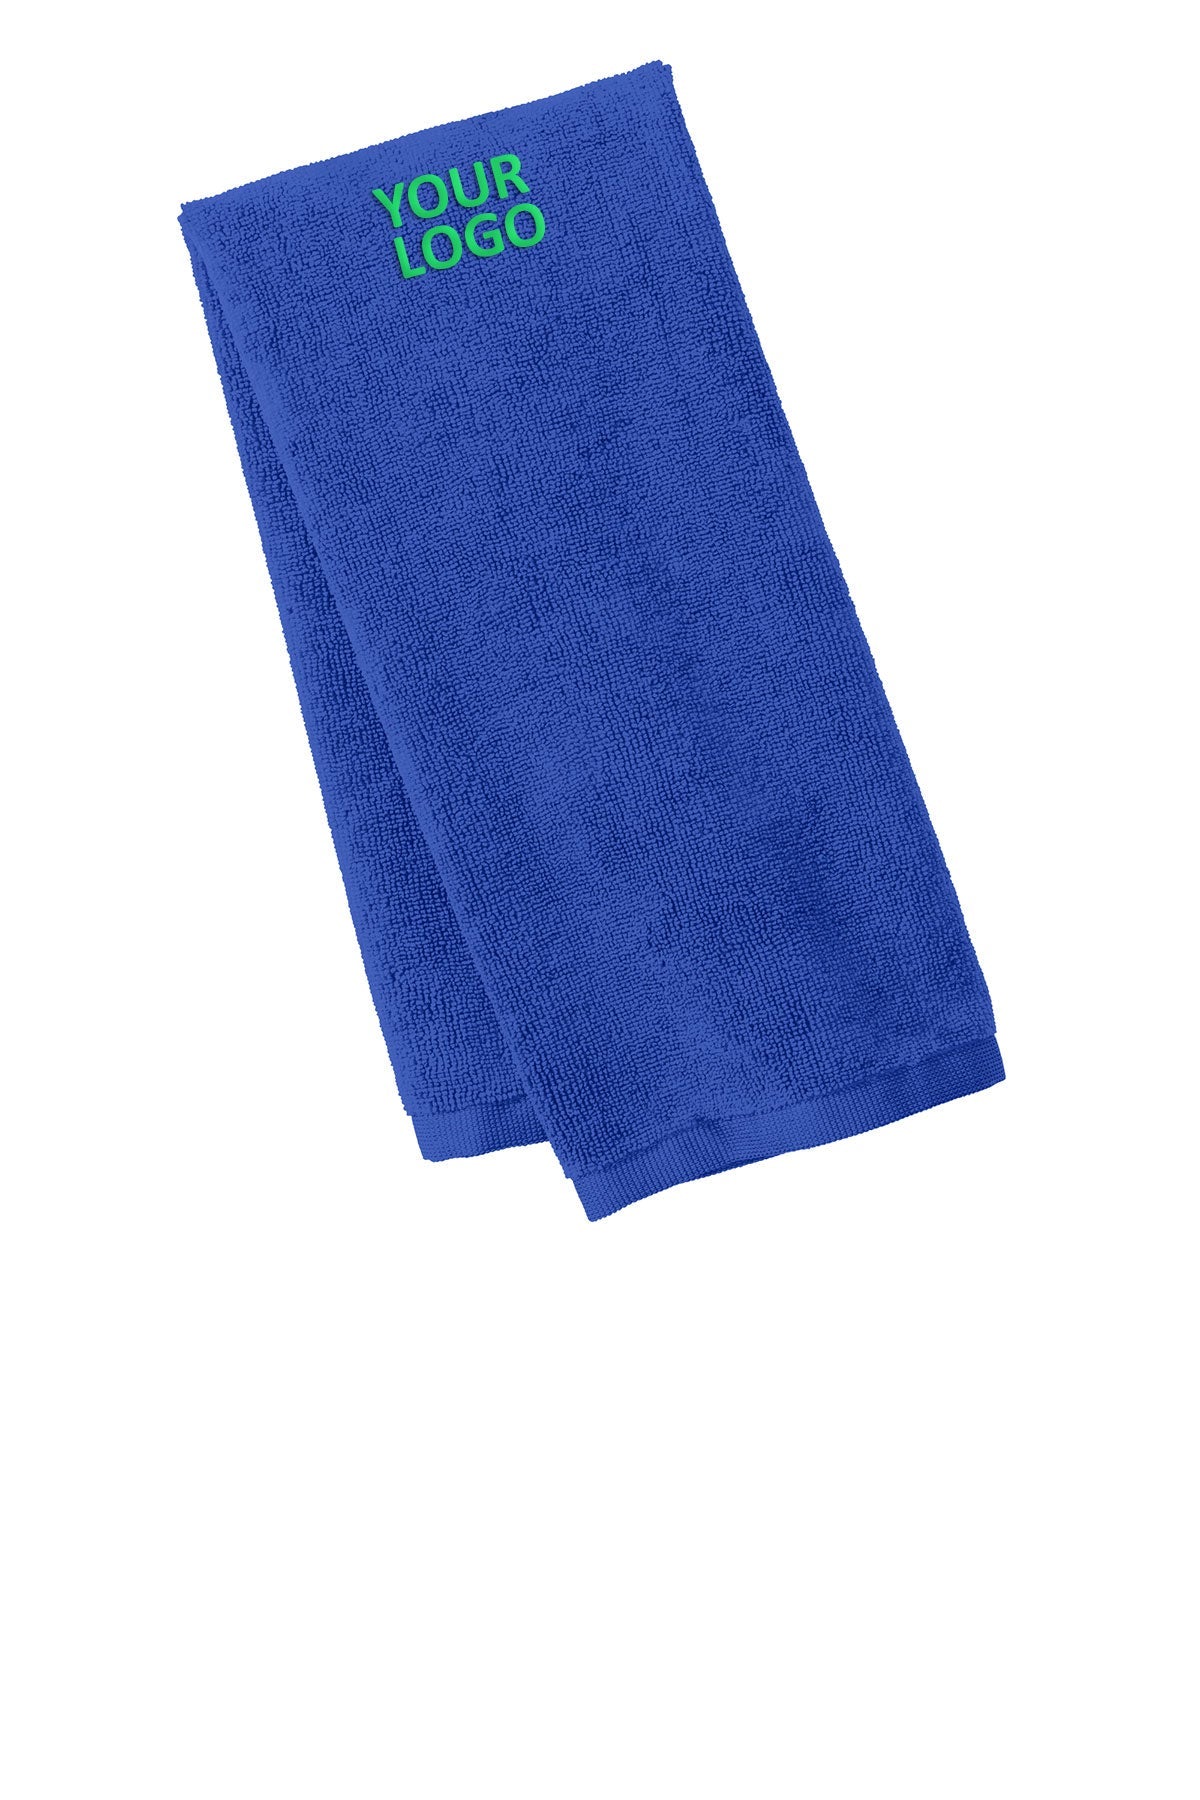 Port Authority Microfiber Golf Towel TW540 Royal